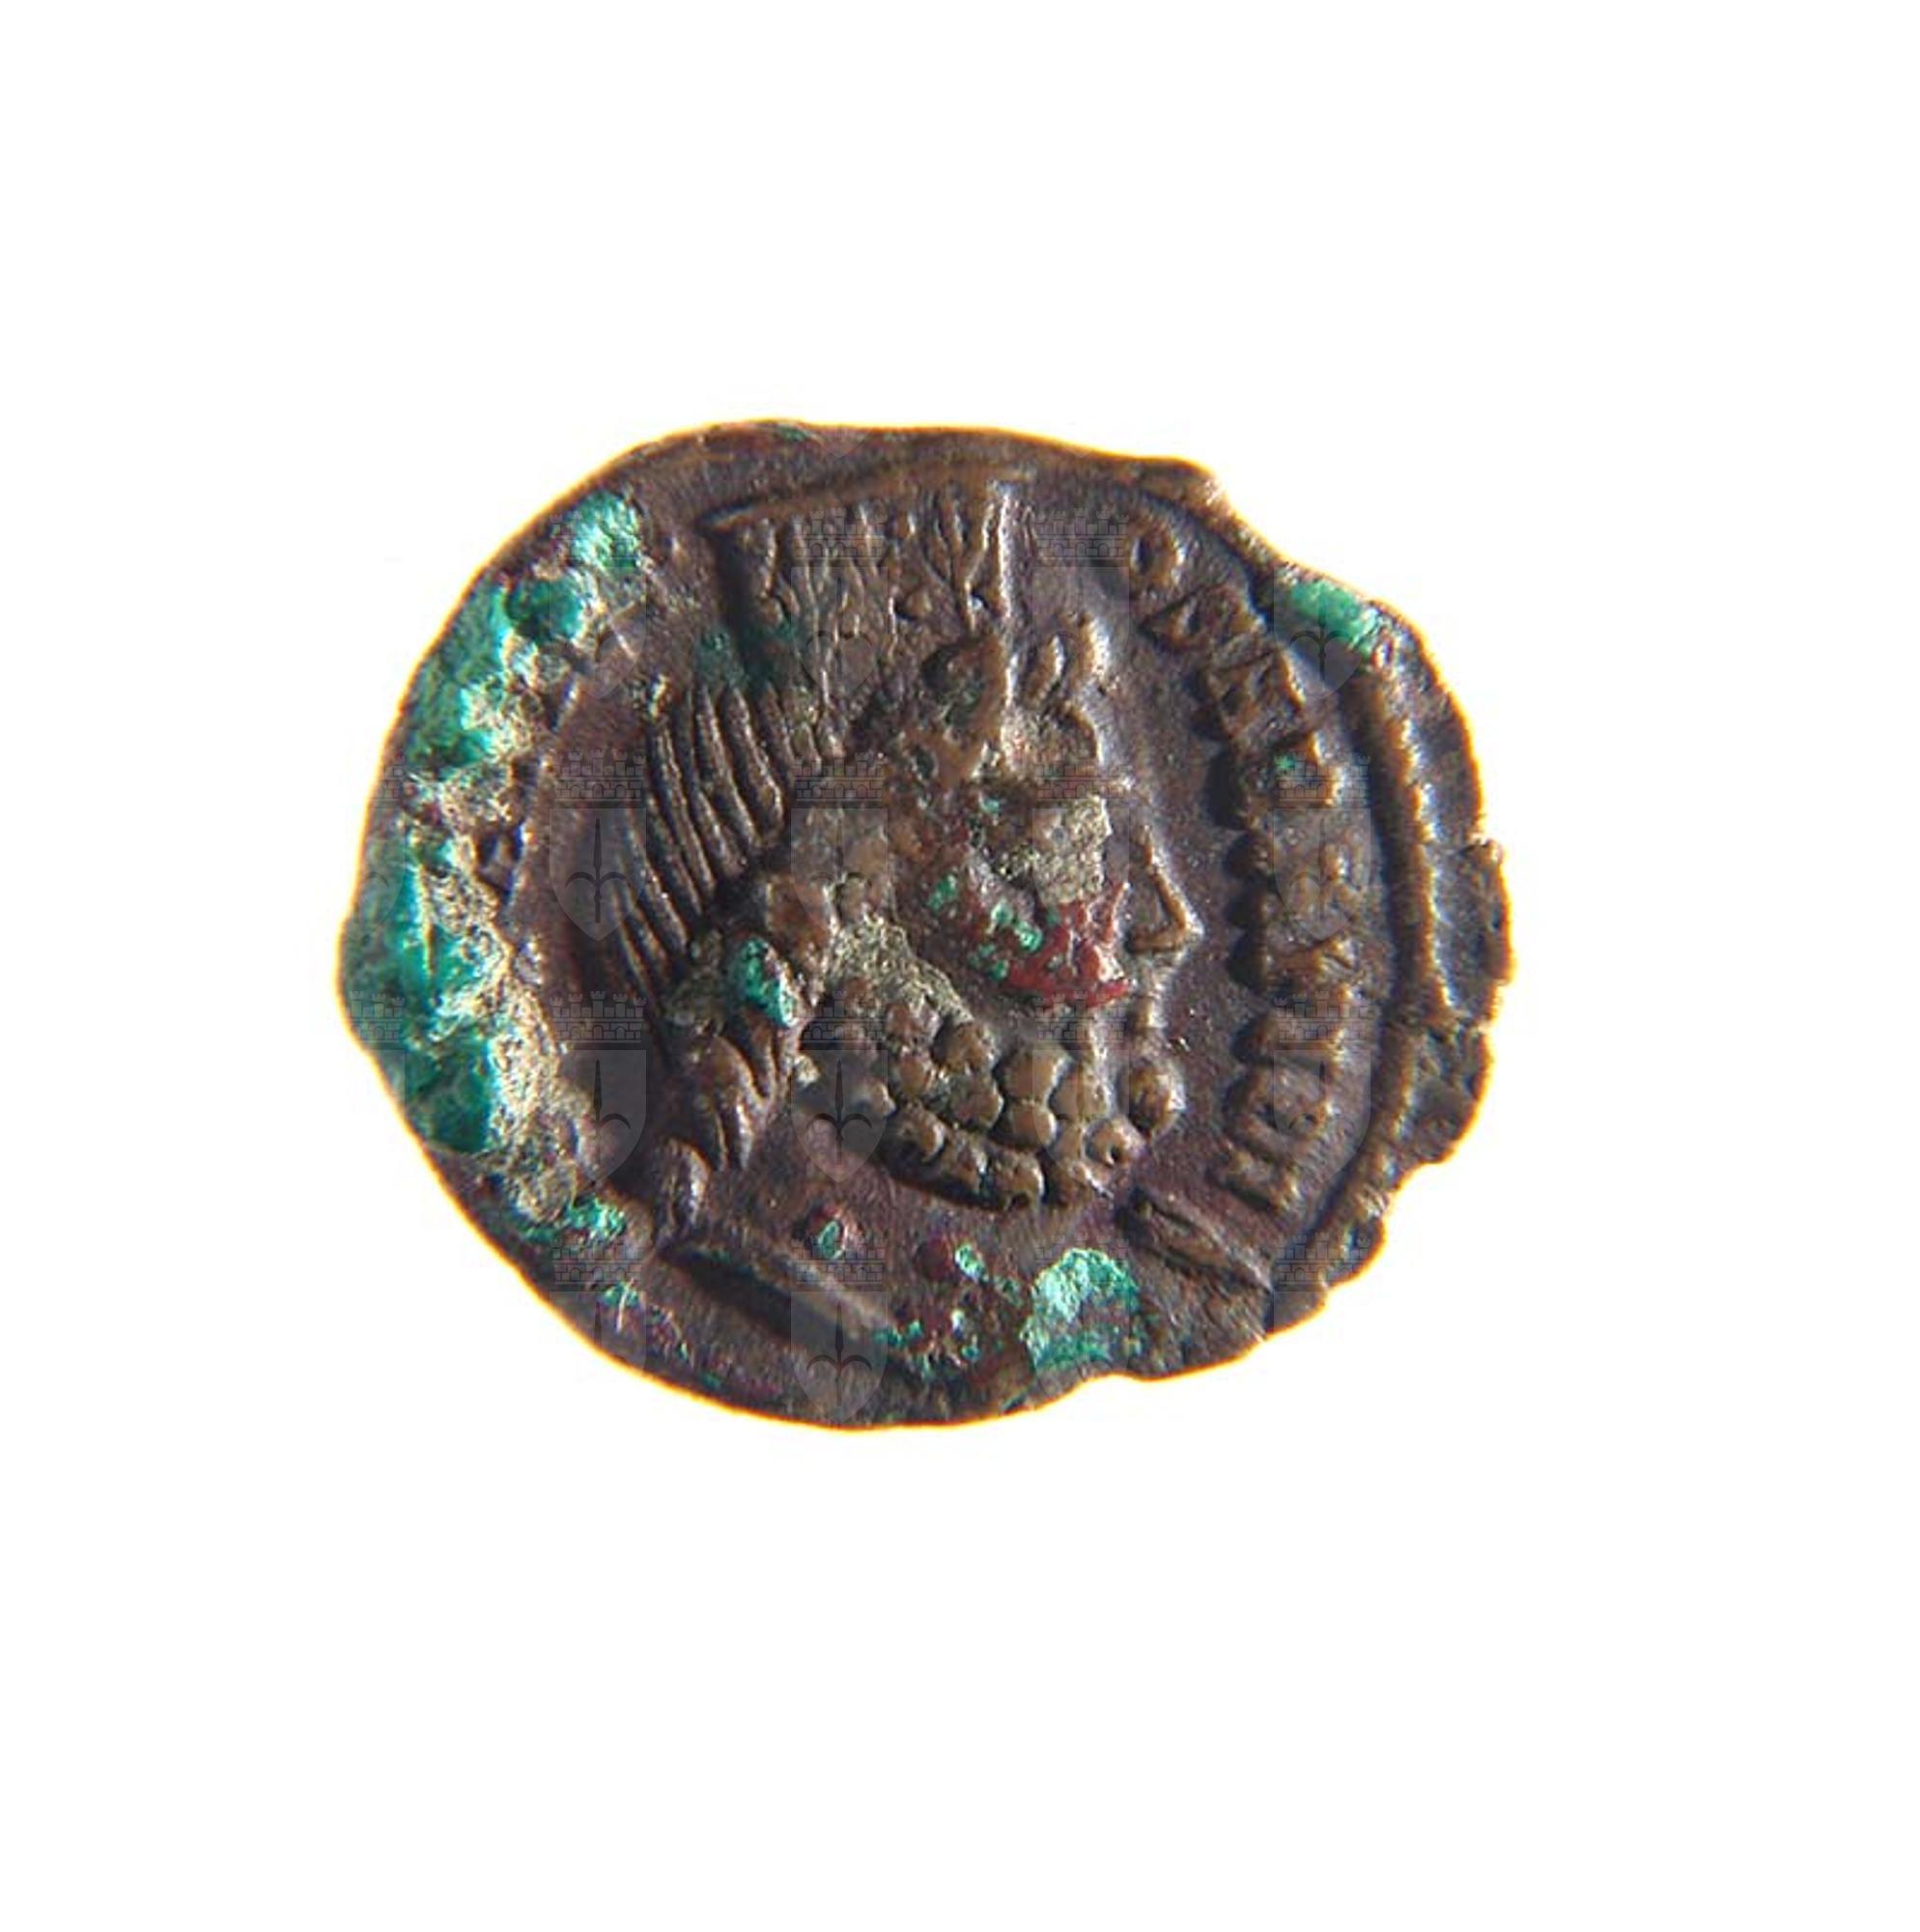 https://catalogomusei.comune.trieste.it/samira/resource/image/numismatica/CMSA_MAW_NU/CMSARA000000_Roma2866_a.JPG?token=65e6c9e1b3173